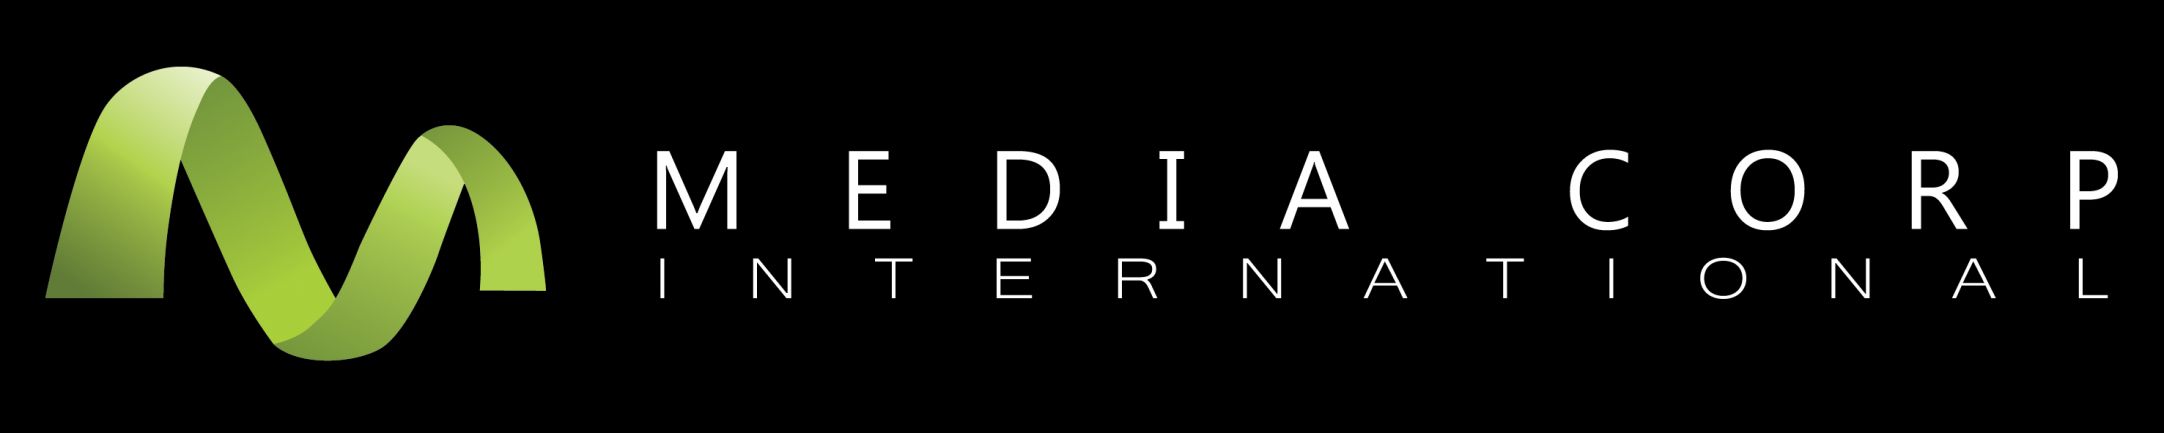 Media Corp International Logo